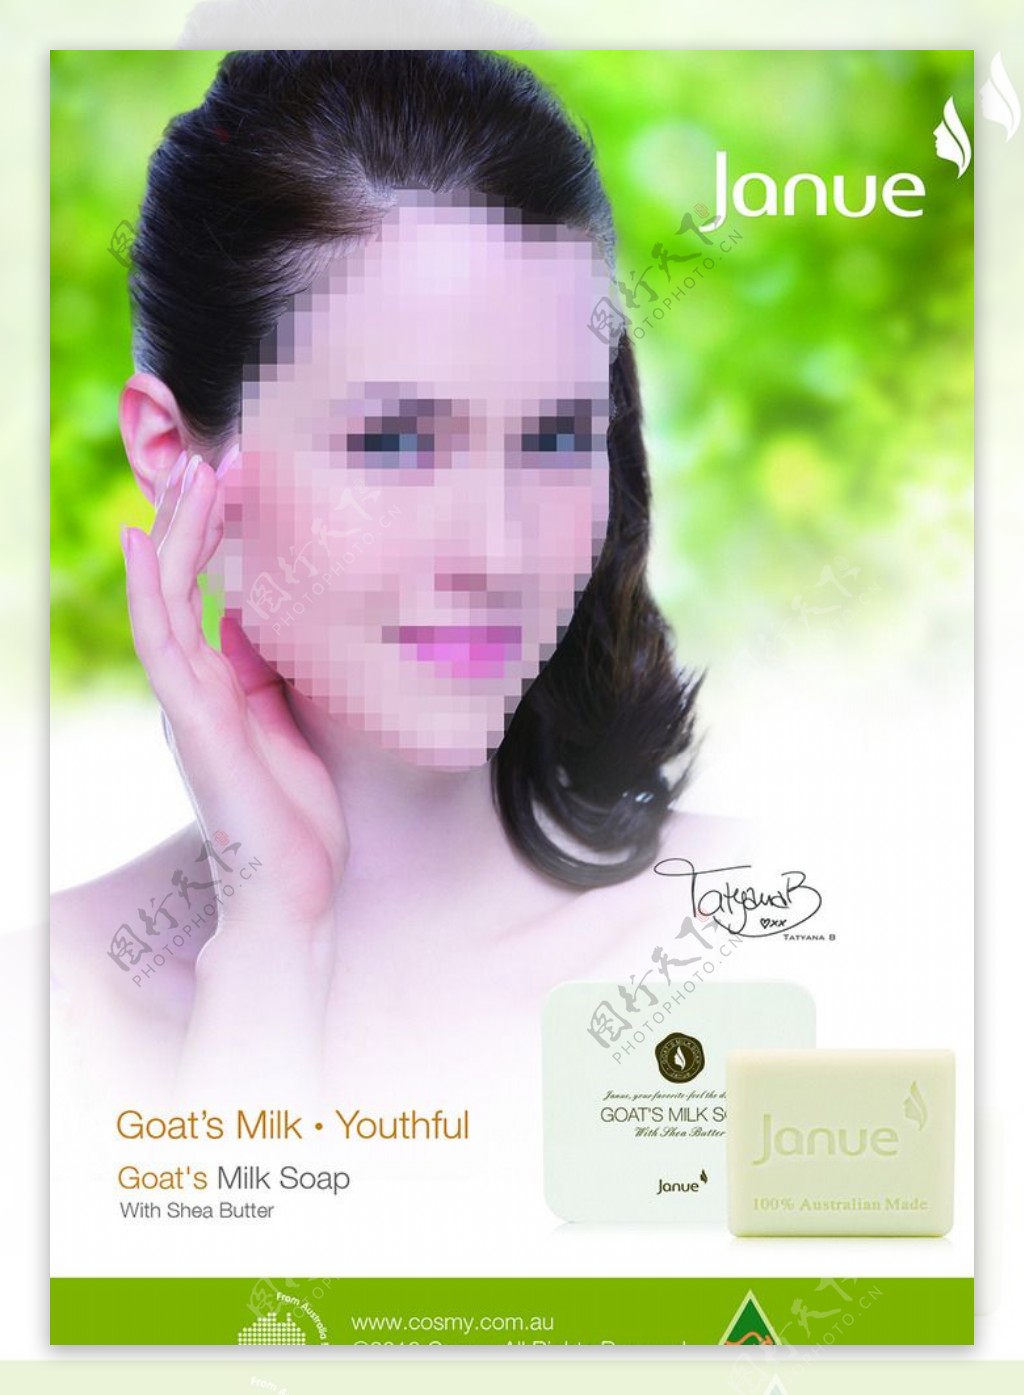 Janue进口护肤品图片